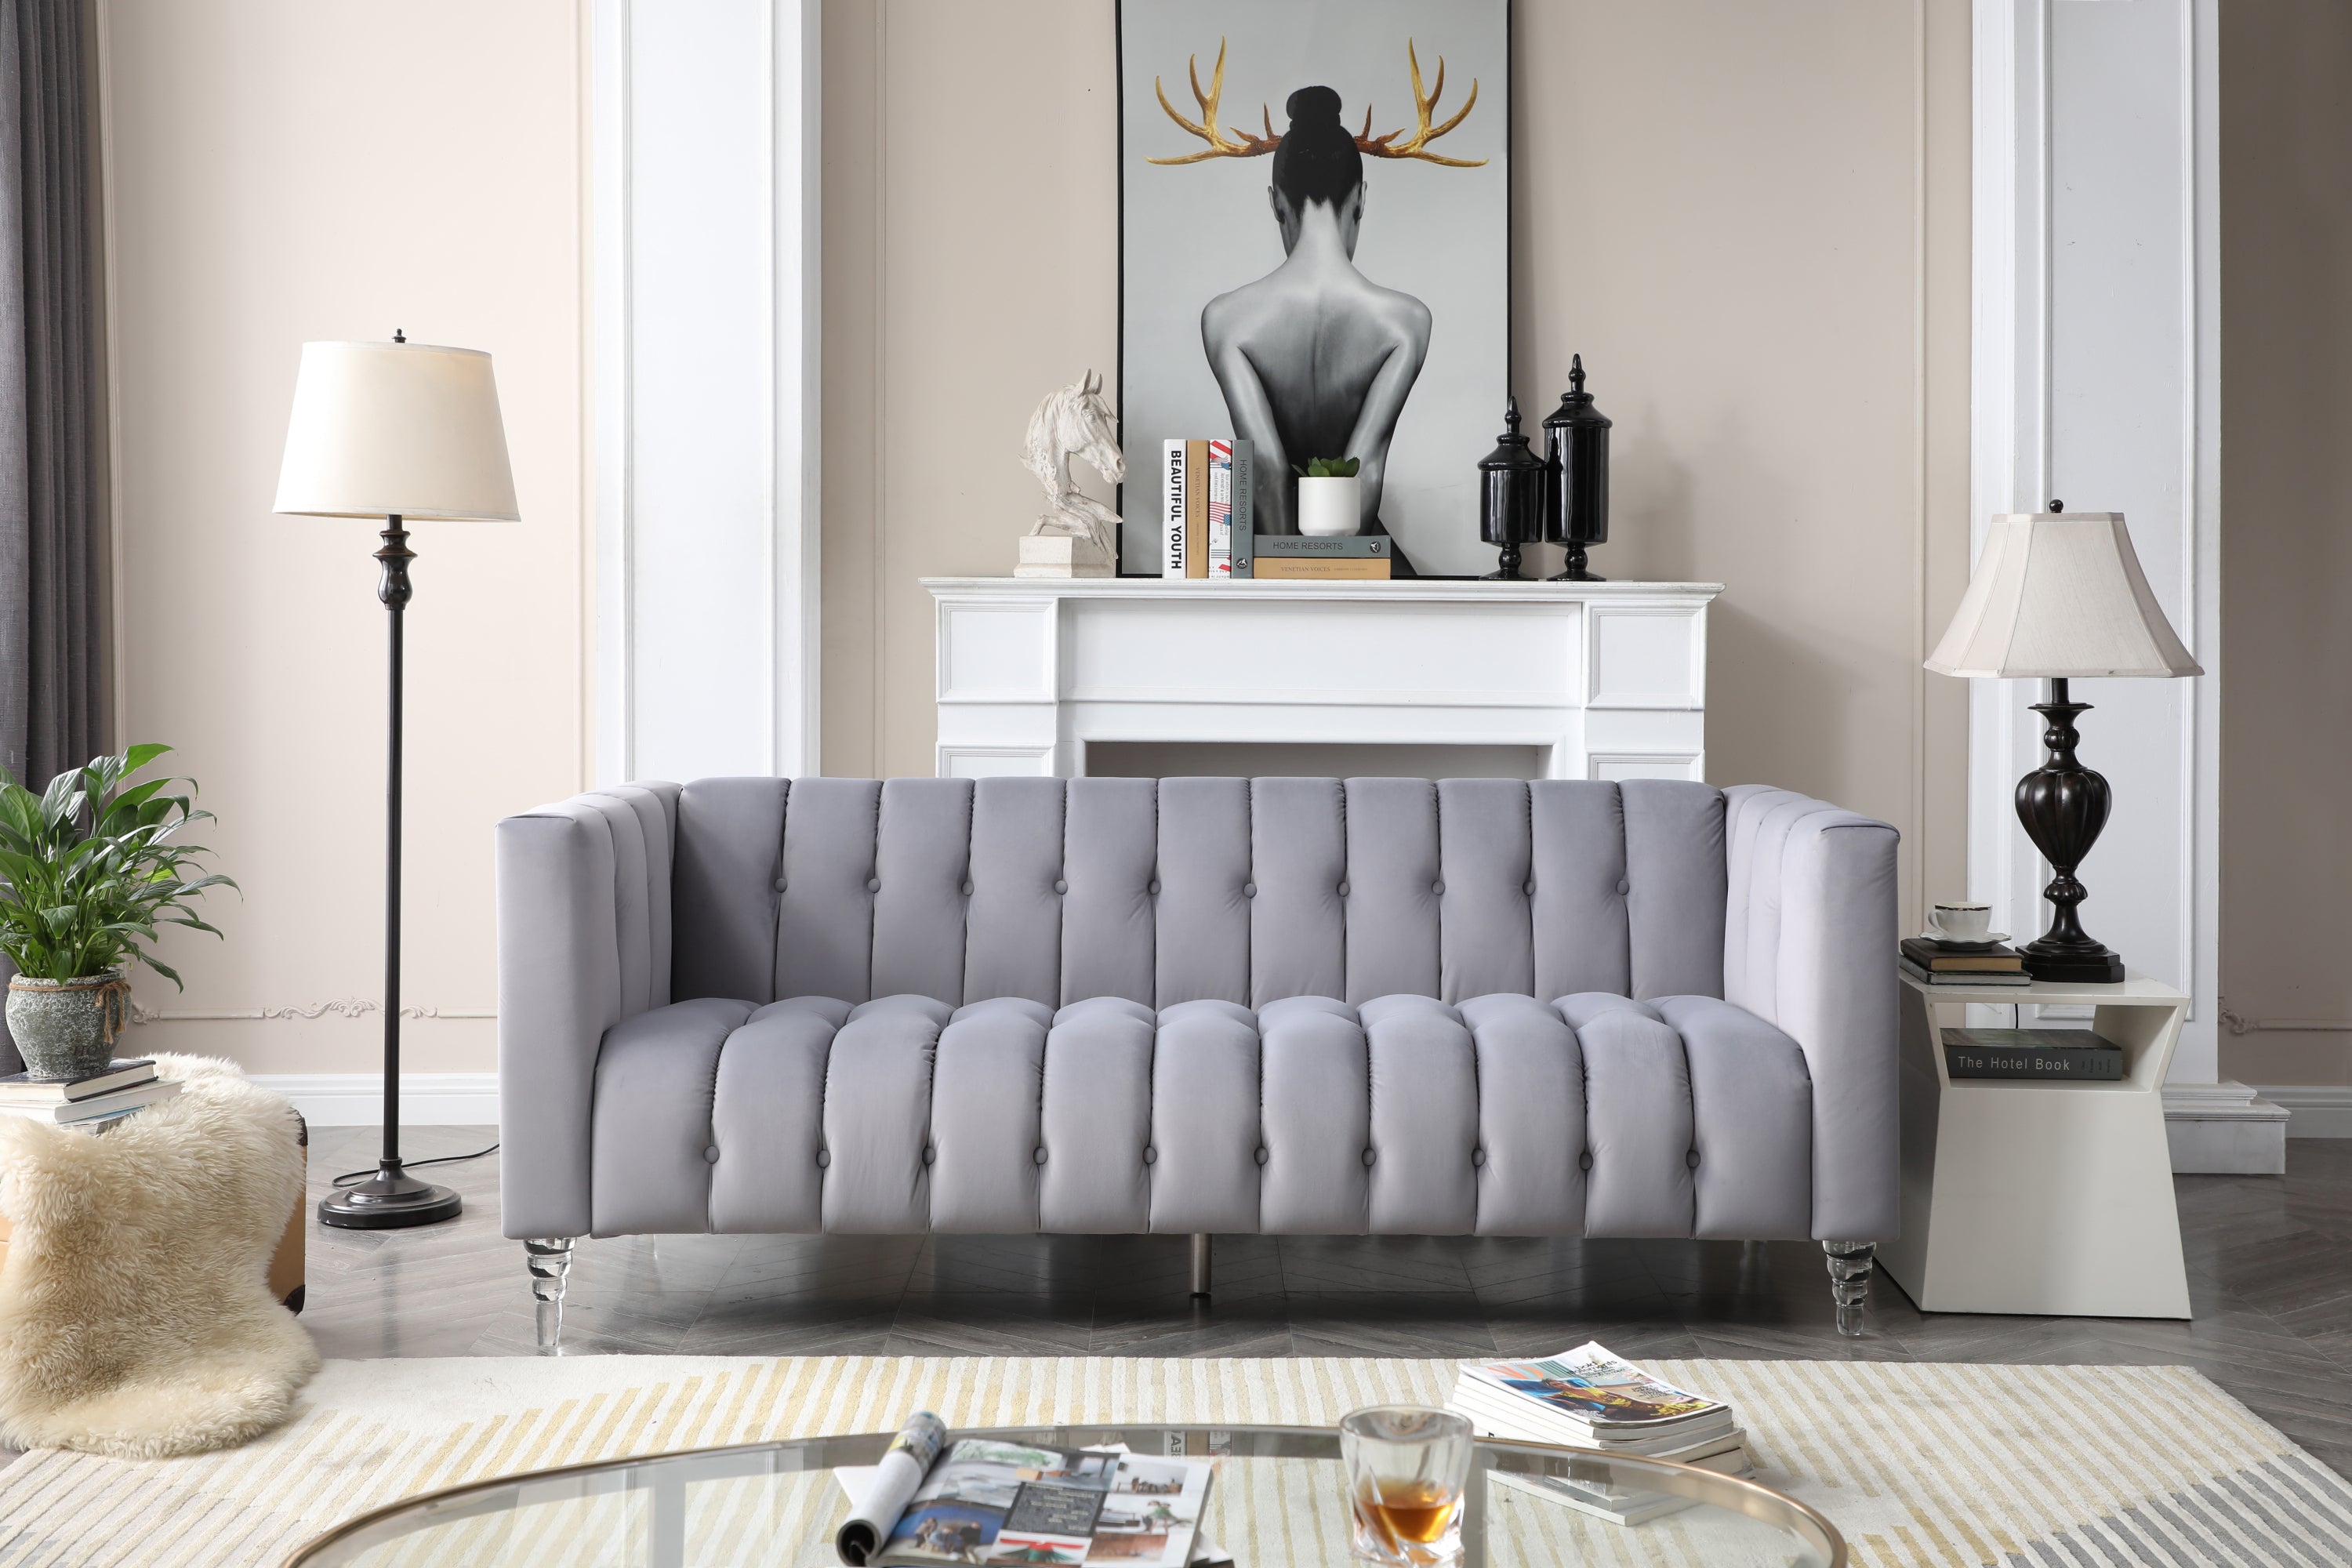 Acrylic Crystal Leg Sofa 3S Sofa (Gray)